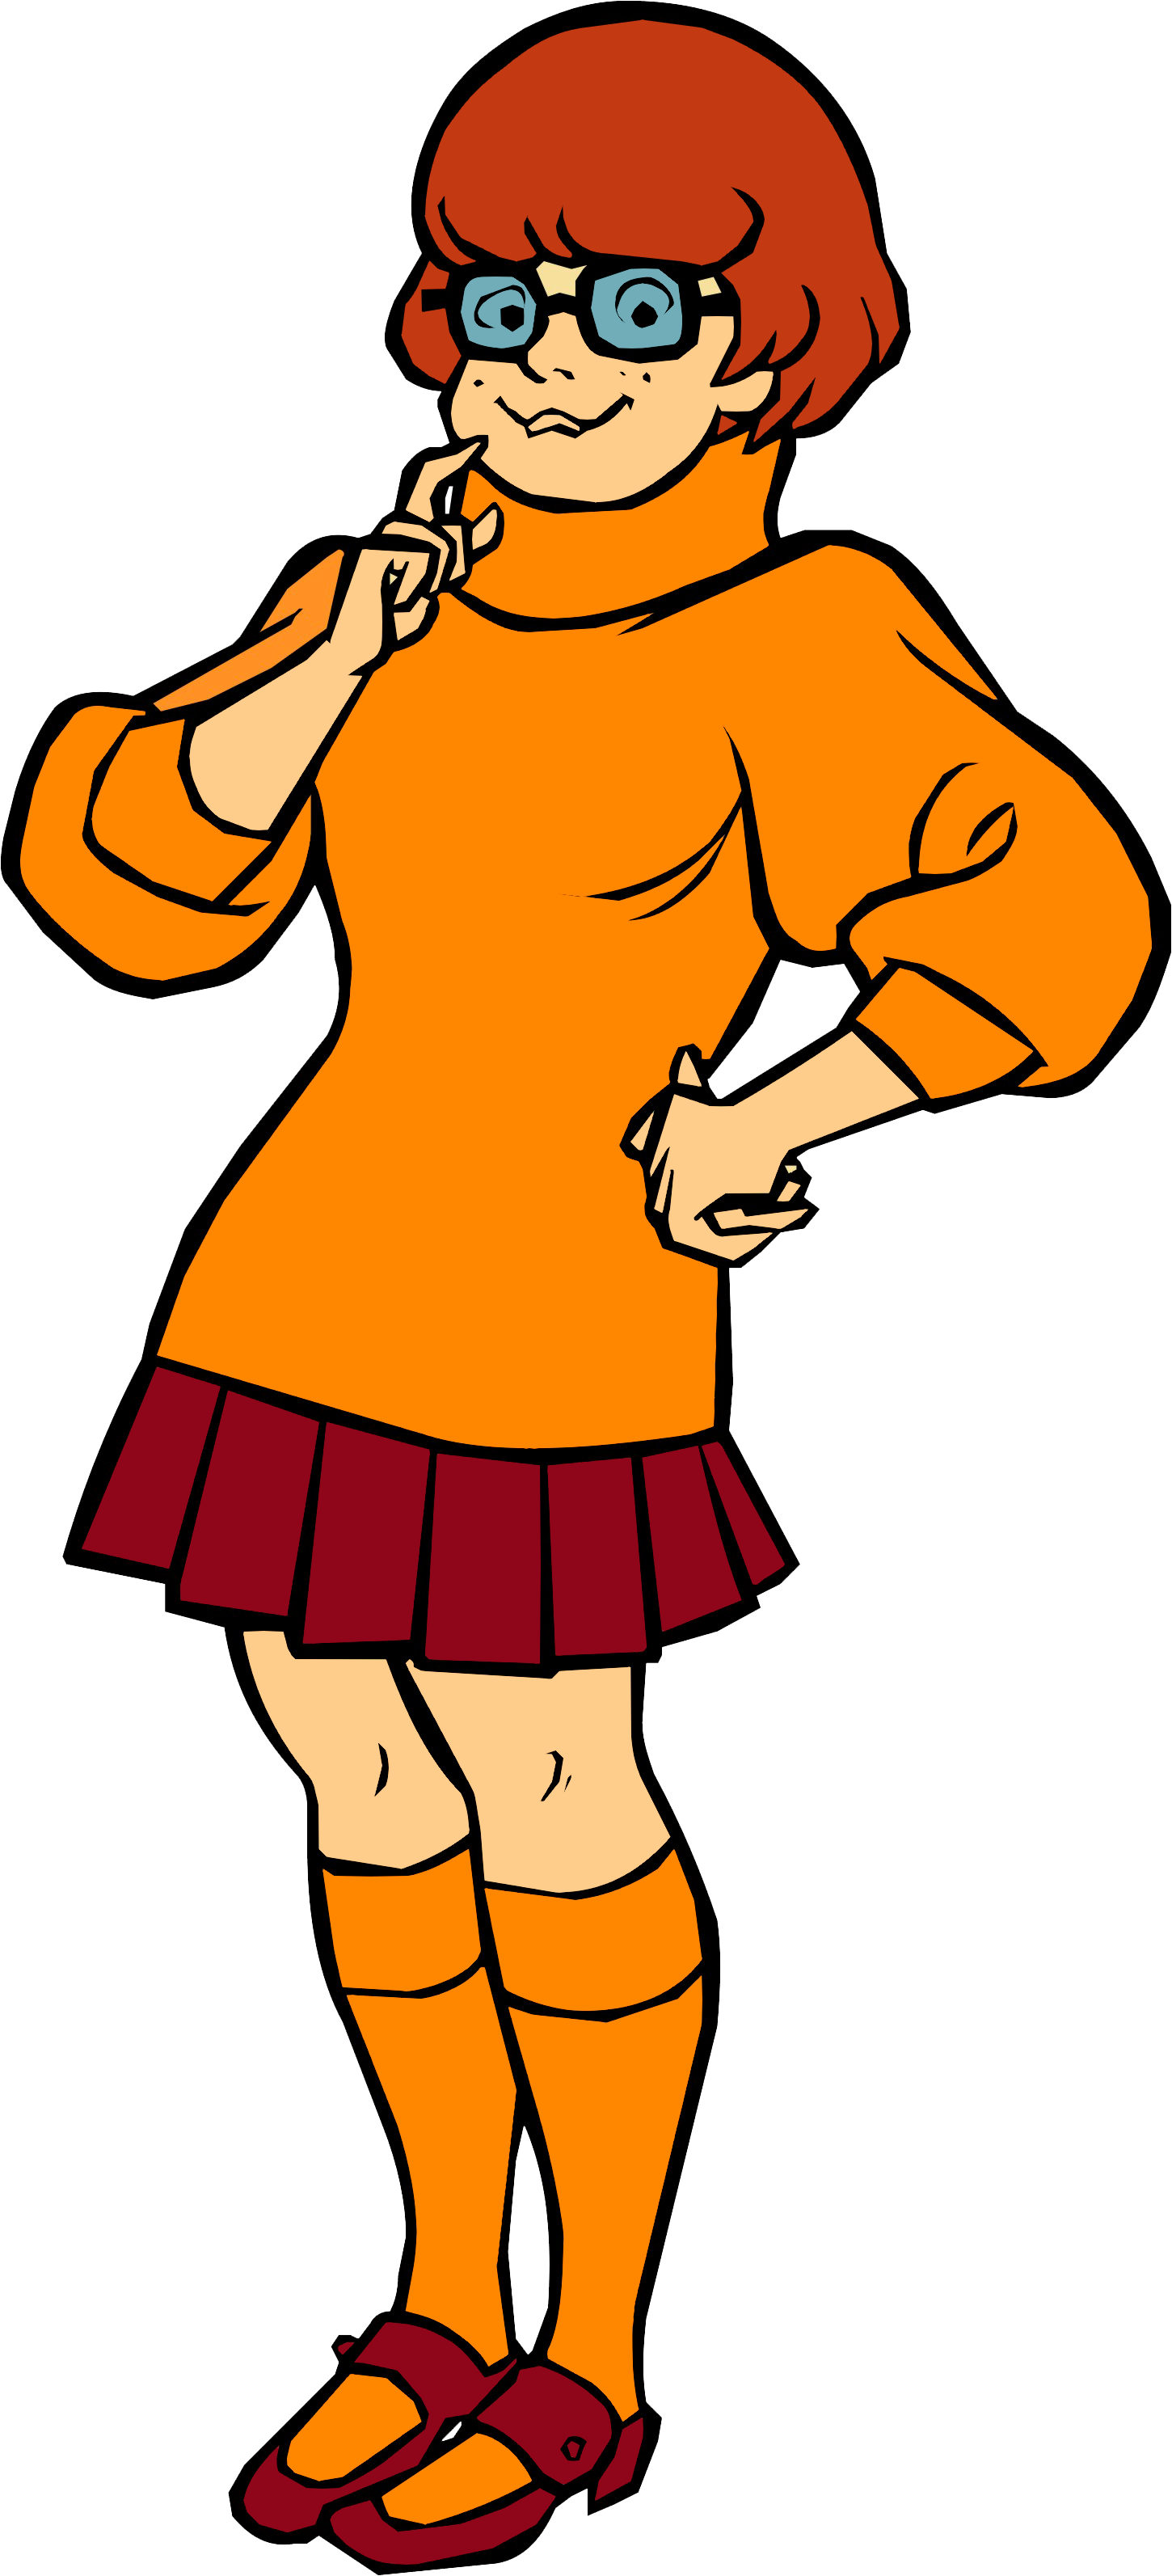 Velma Dinkley vector 3 by HomerSimpson1983 on DeviantArt